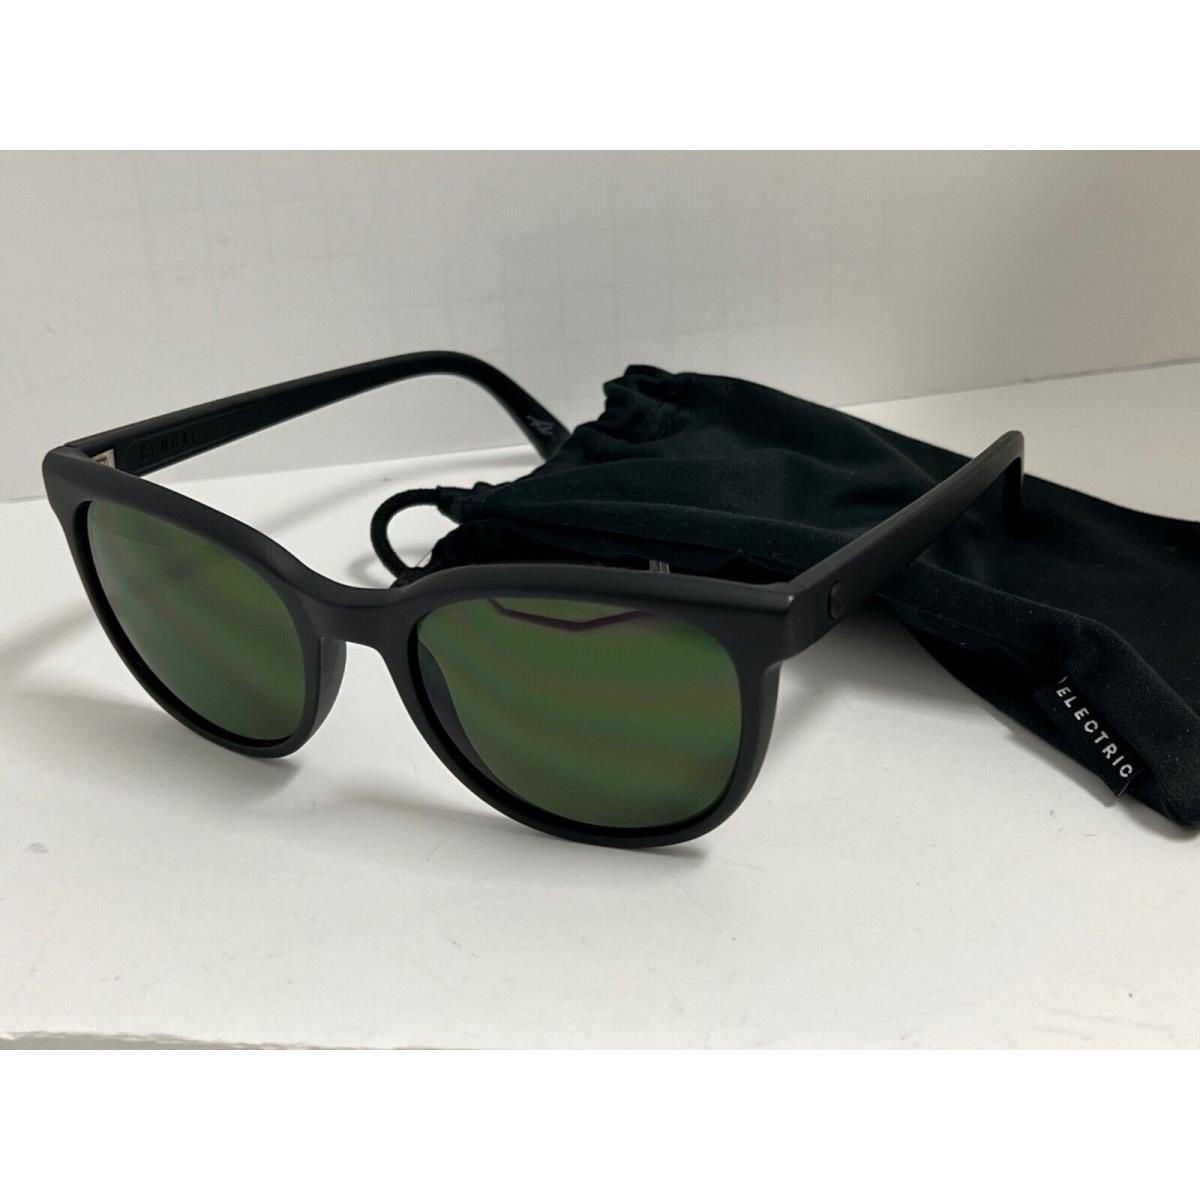 Electric sunglasses Bengal - Black Frame, Polarized Lens